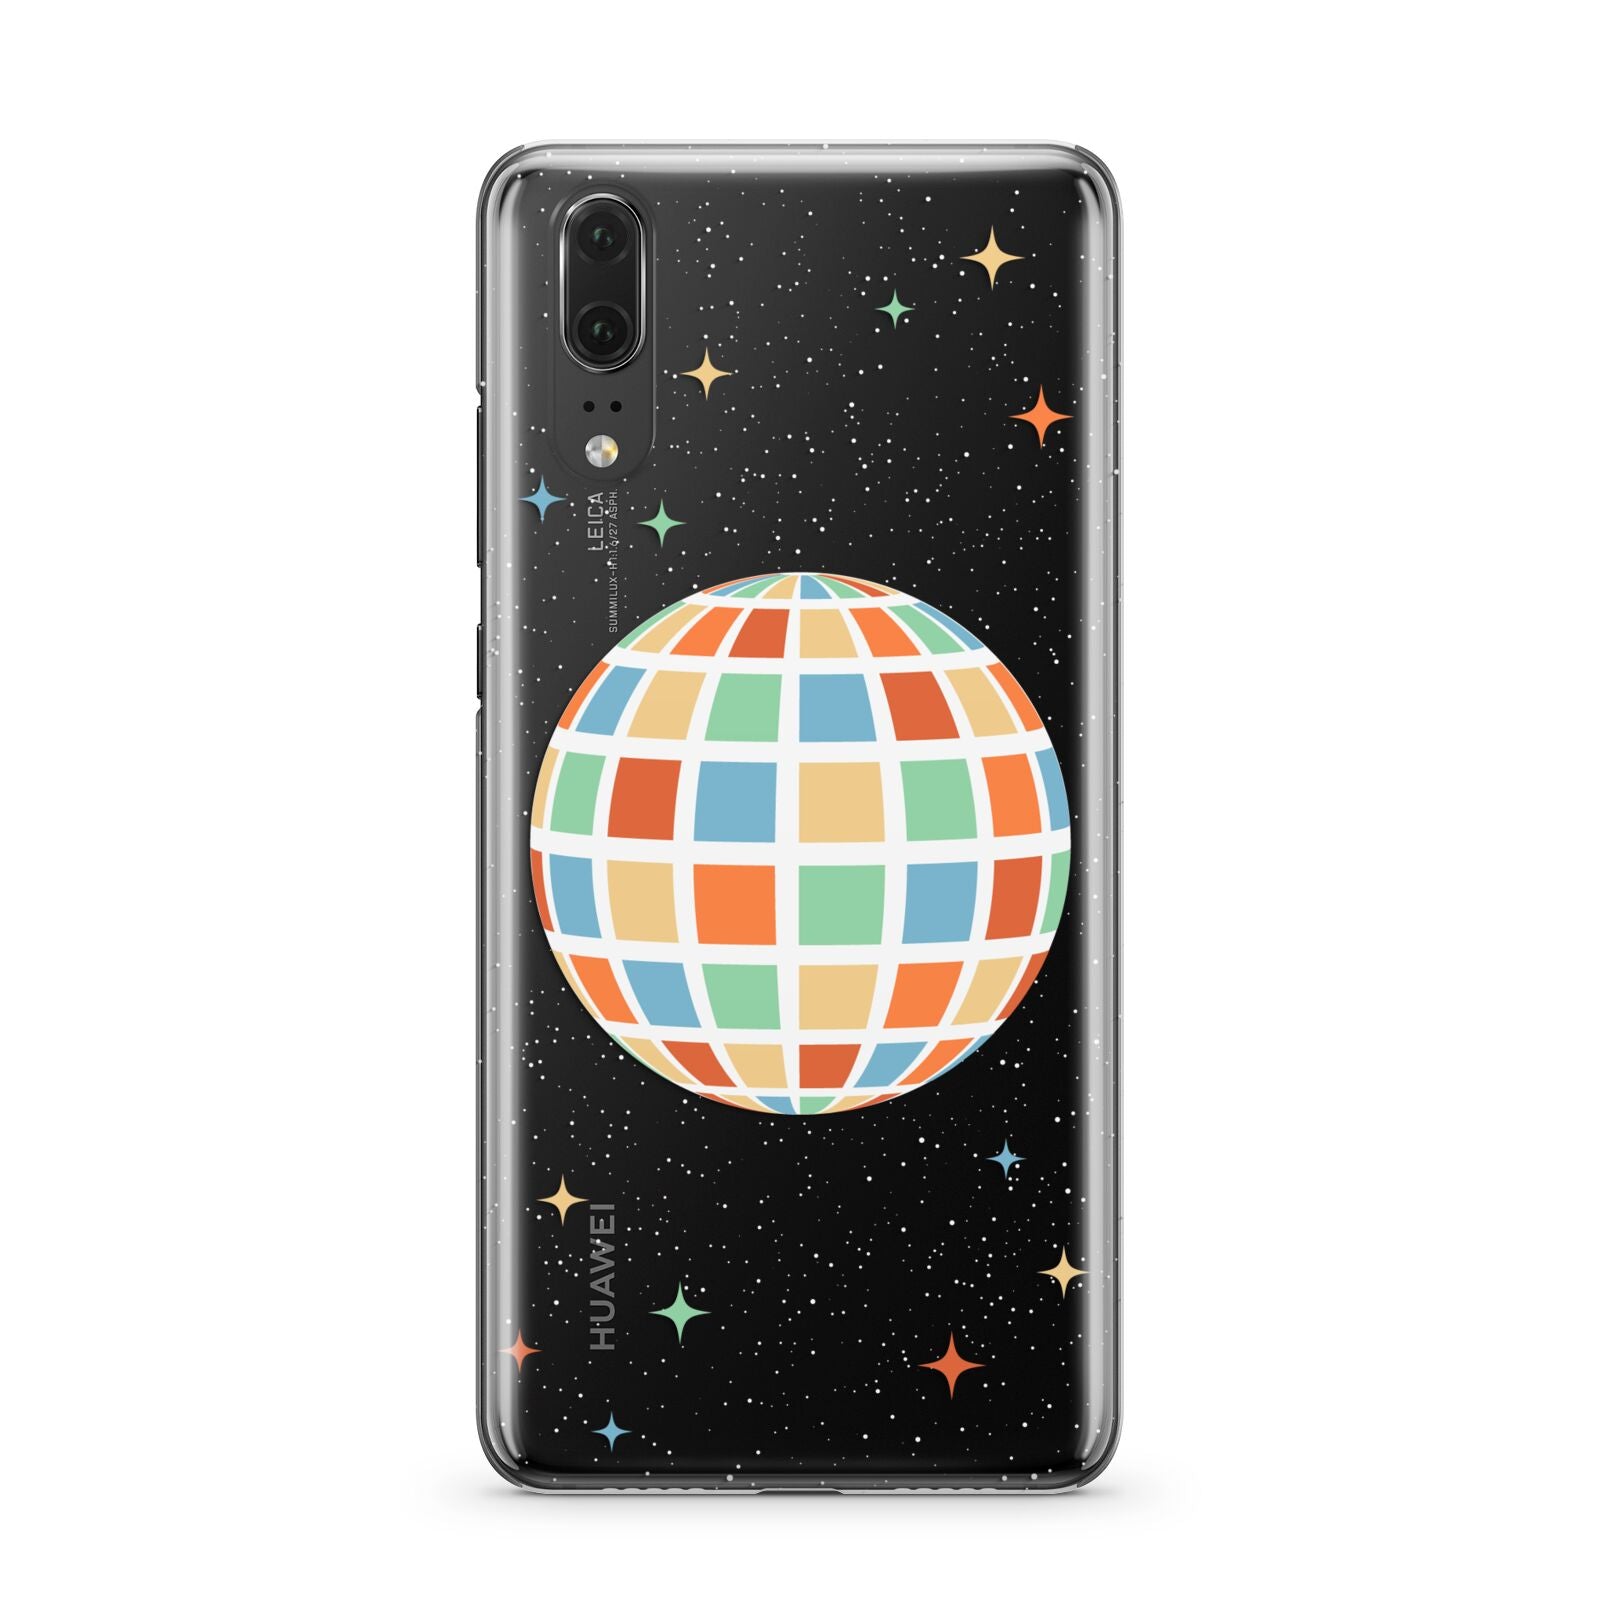 Disco Ball Huawei P20 Phone Case